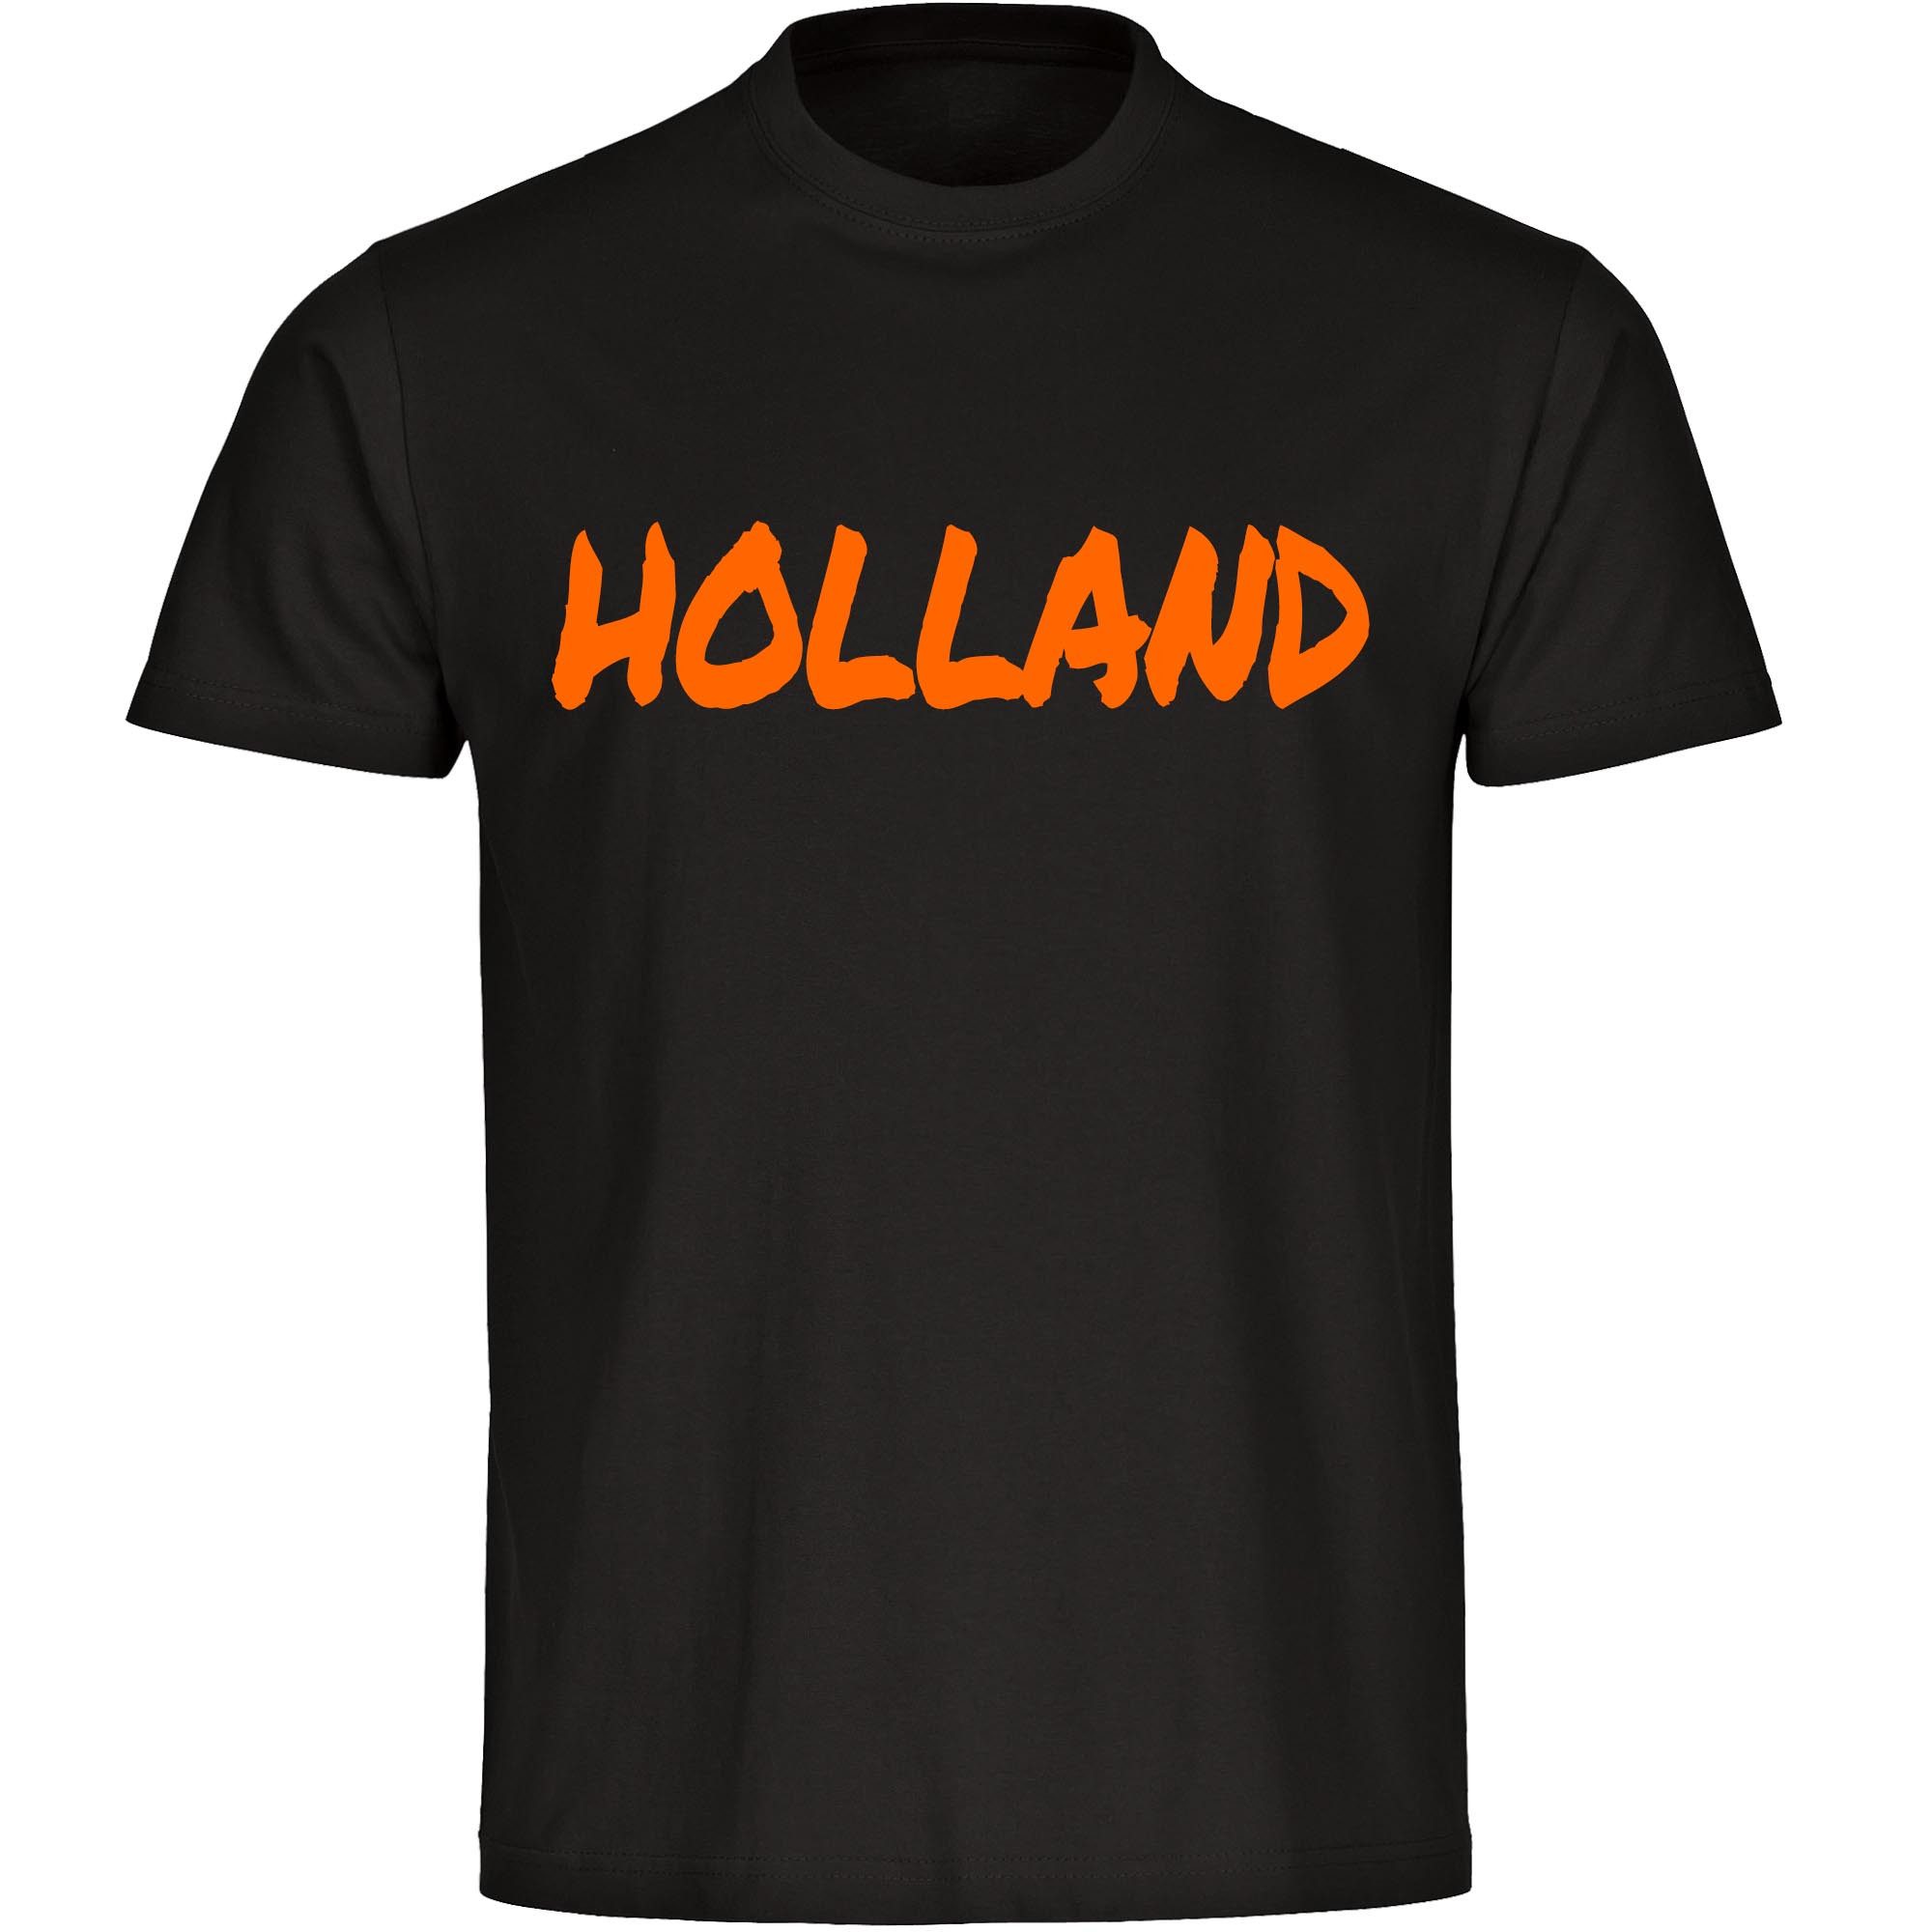 multifanshop T-Shirt Kinder Holland - Textmarker - Boy Girl